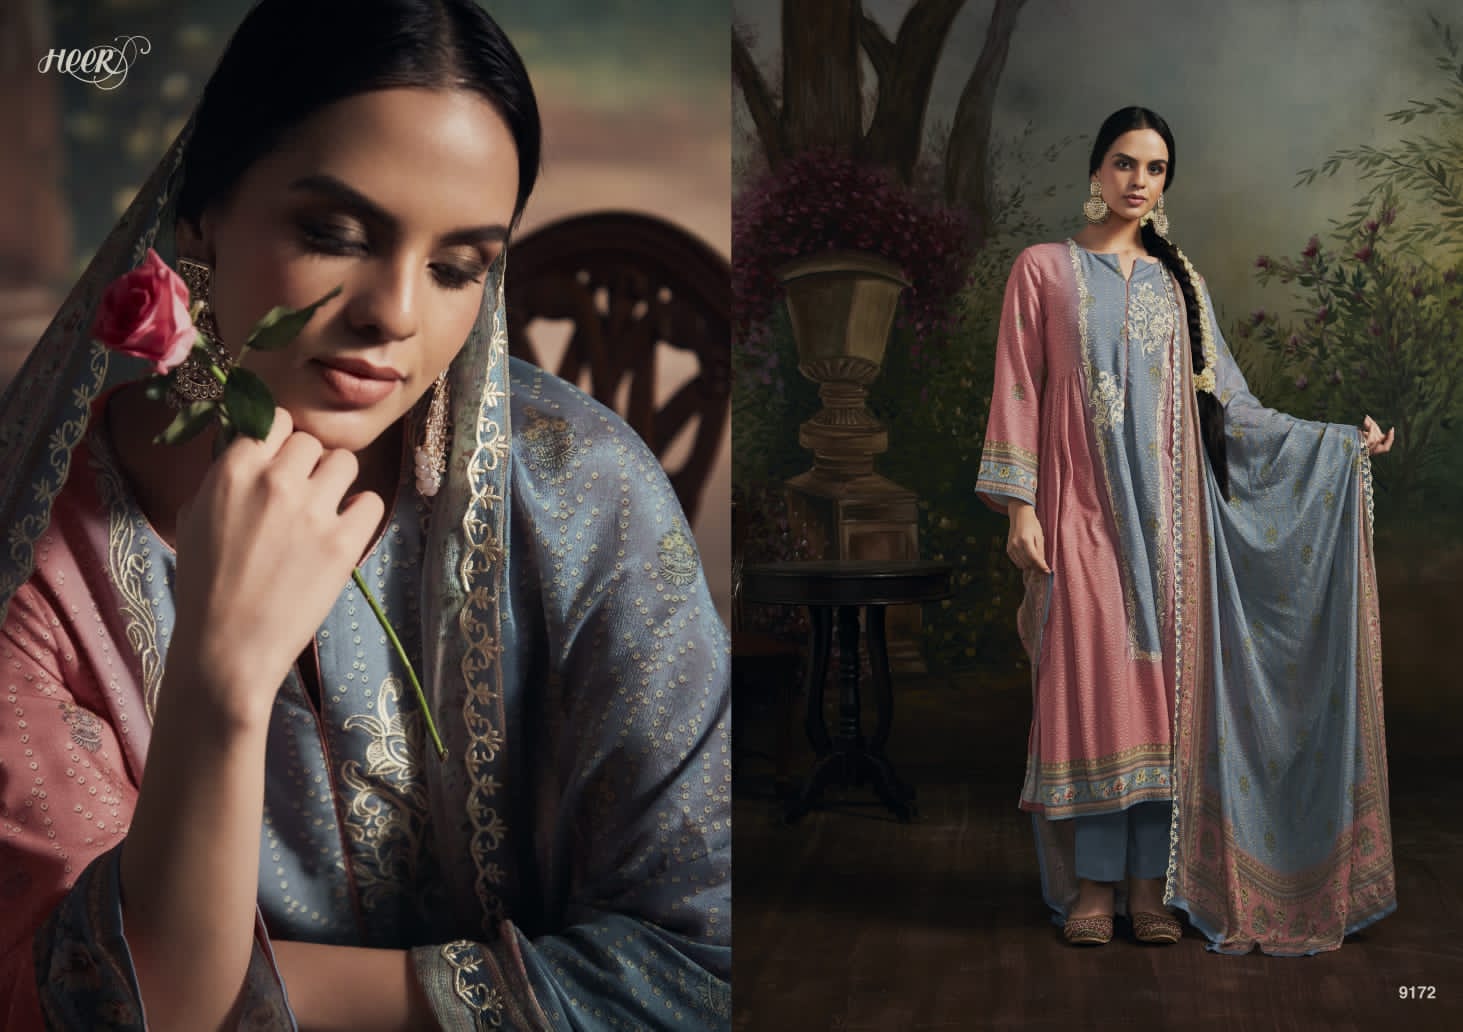 Samah Kimora Heer Muslin Silk Pant Style Suits